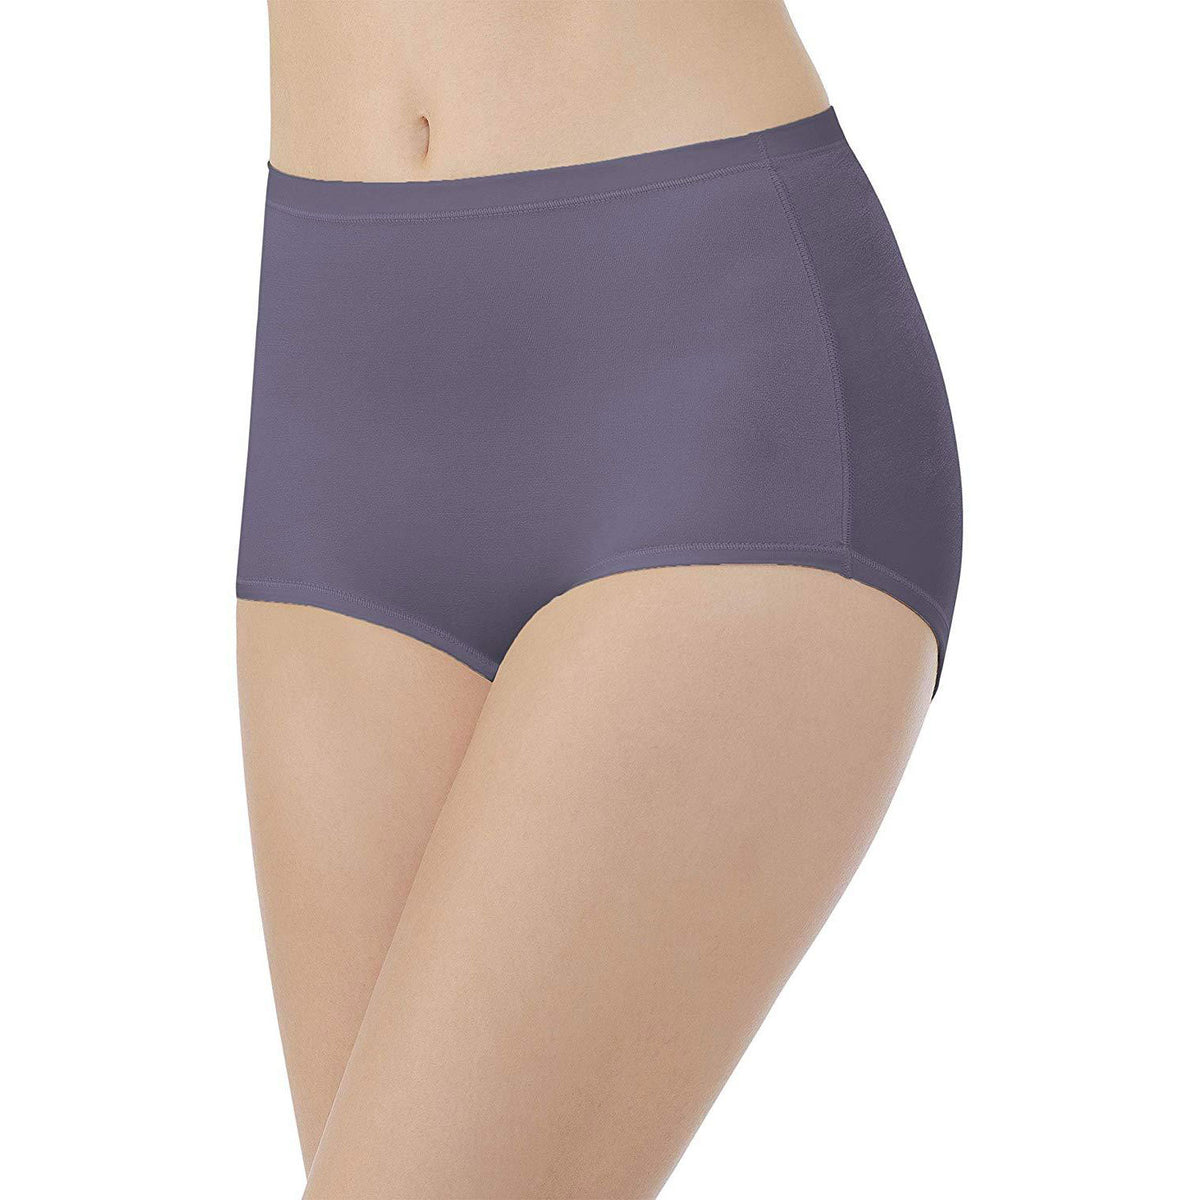 Vassarette Women's 5-Pack Invisibly Smooth Slip Short, Lace Trim